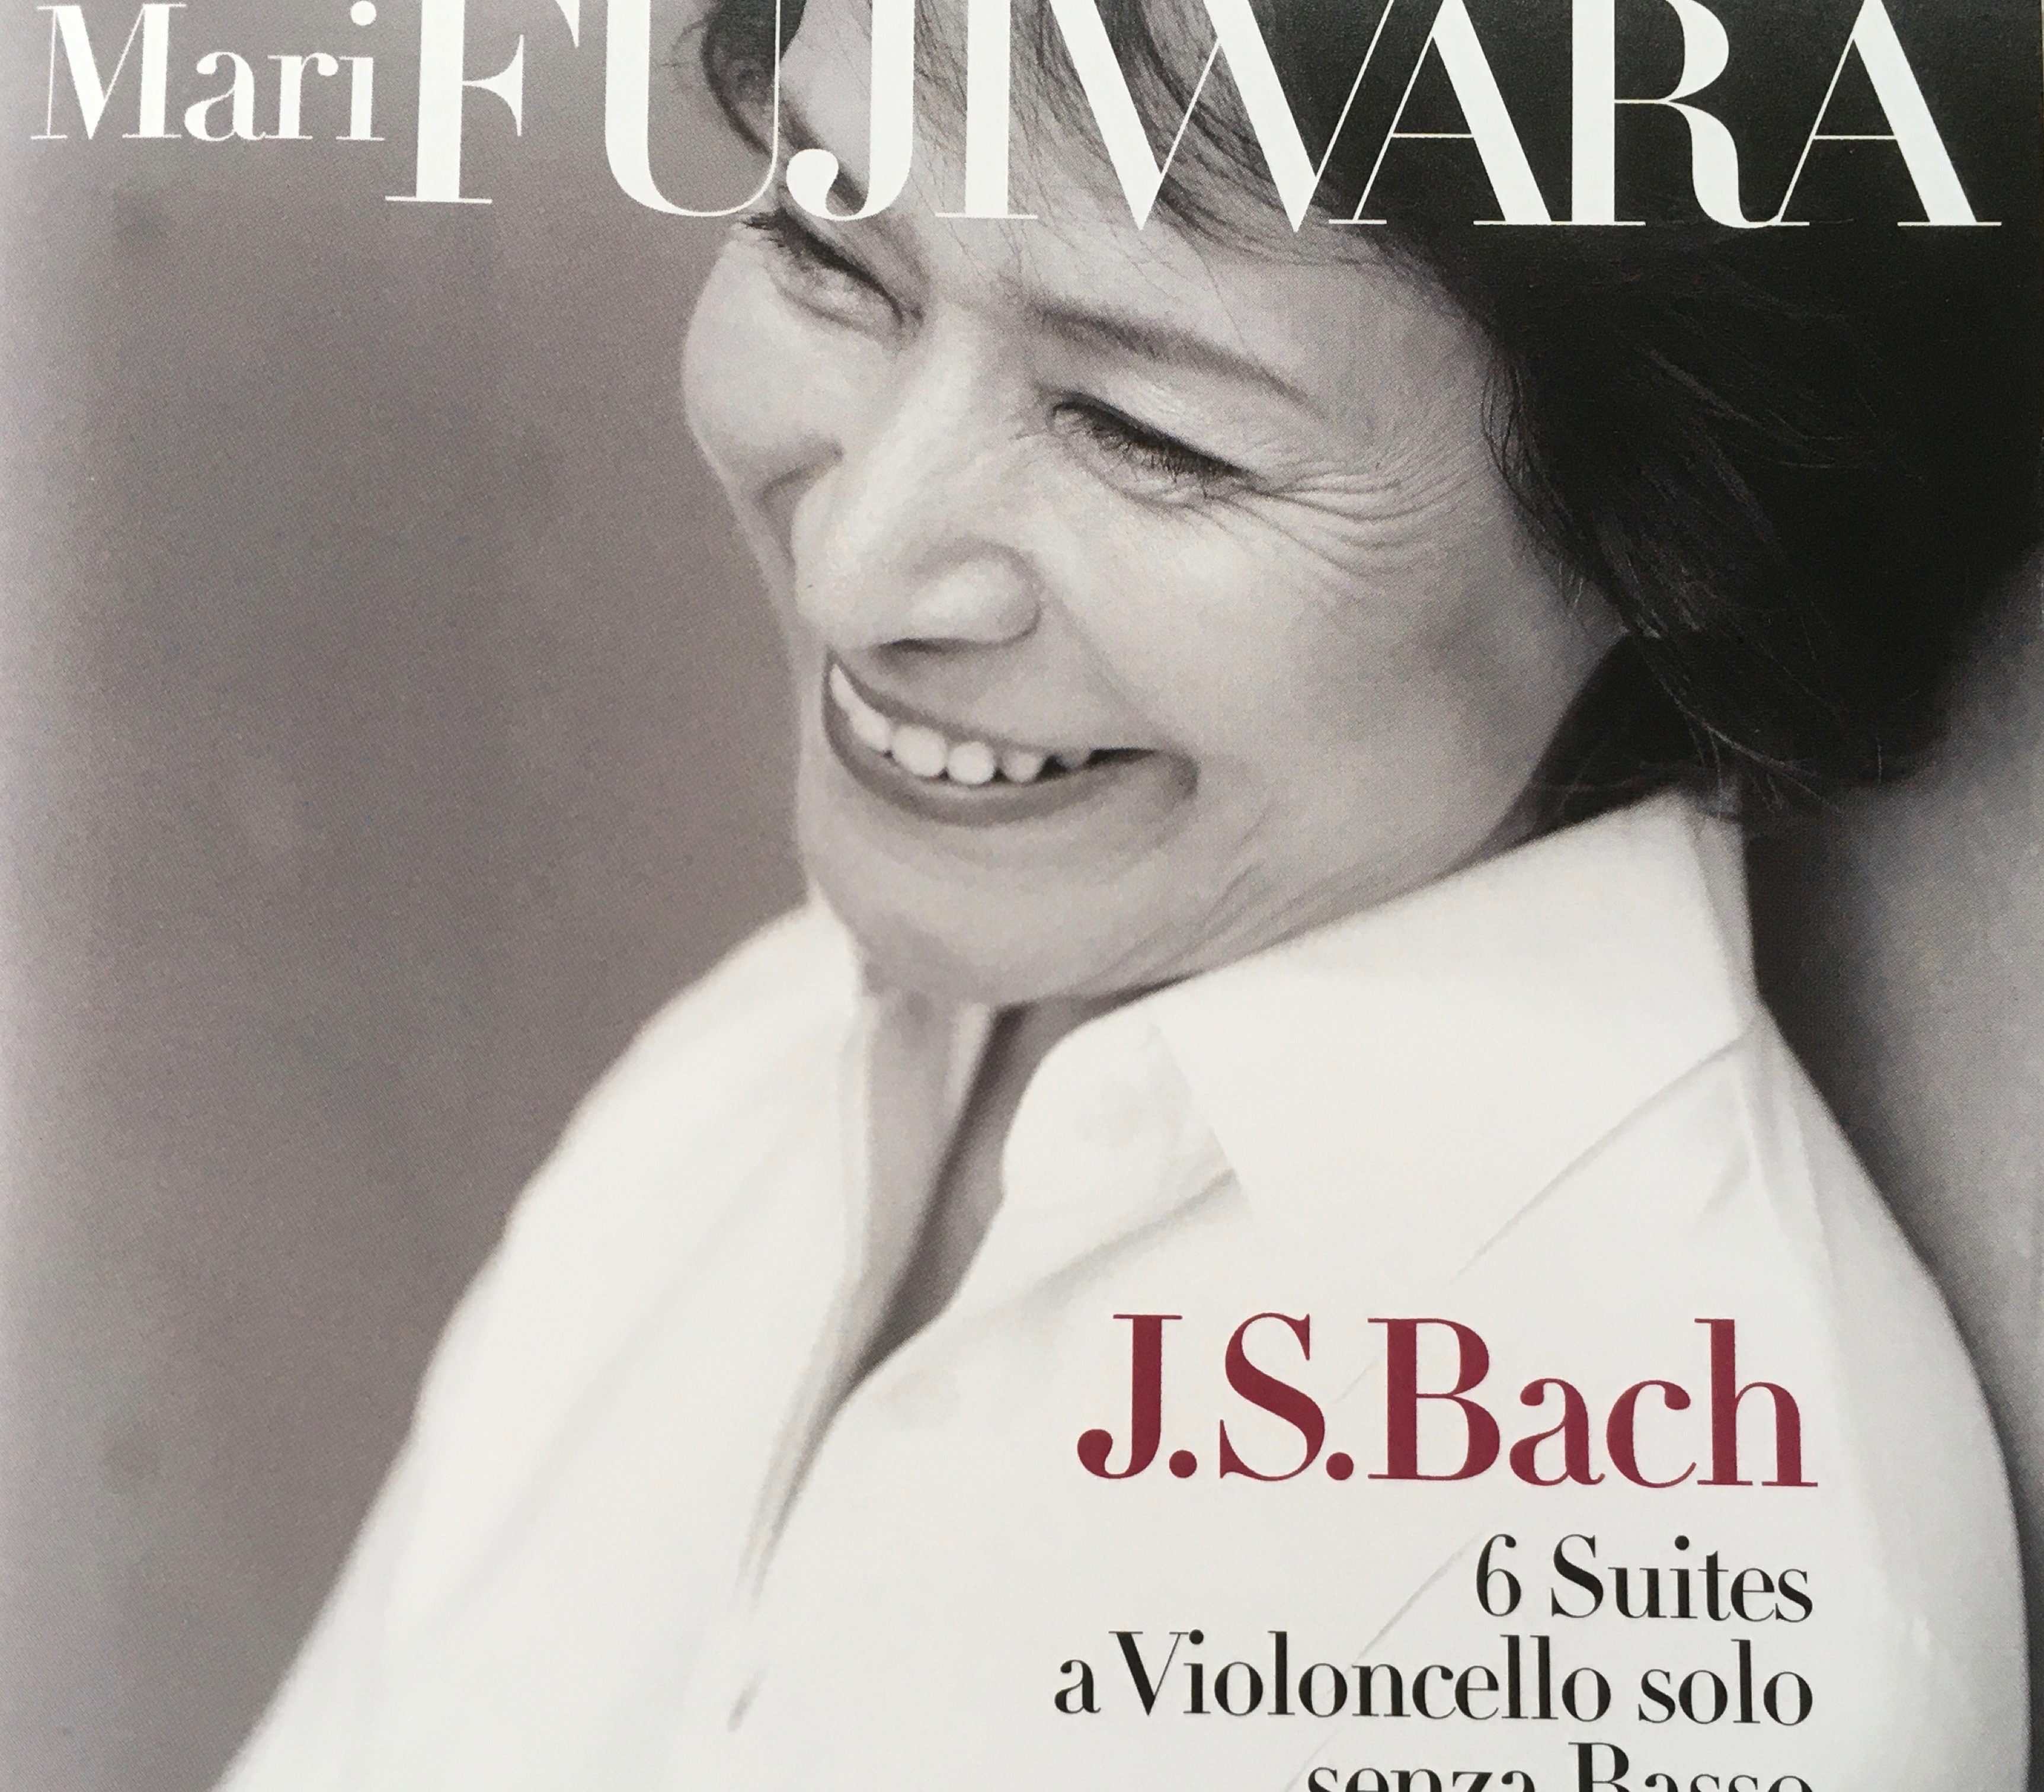 Review of Bach Cello Suites recording by Mari Fujiwara